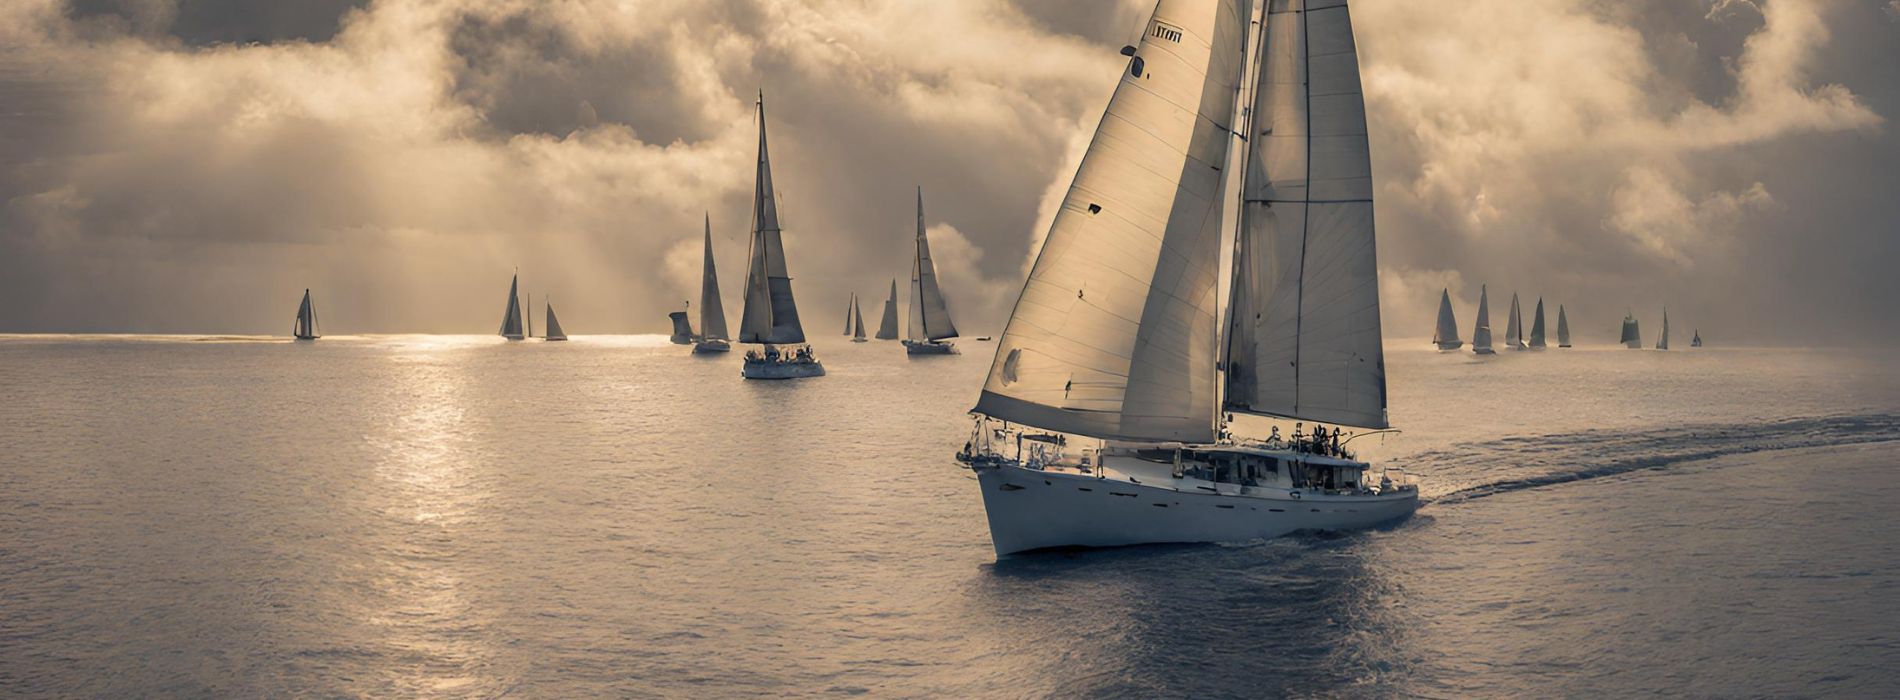 Is sailing dangerous? - Madeinsea©